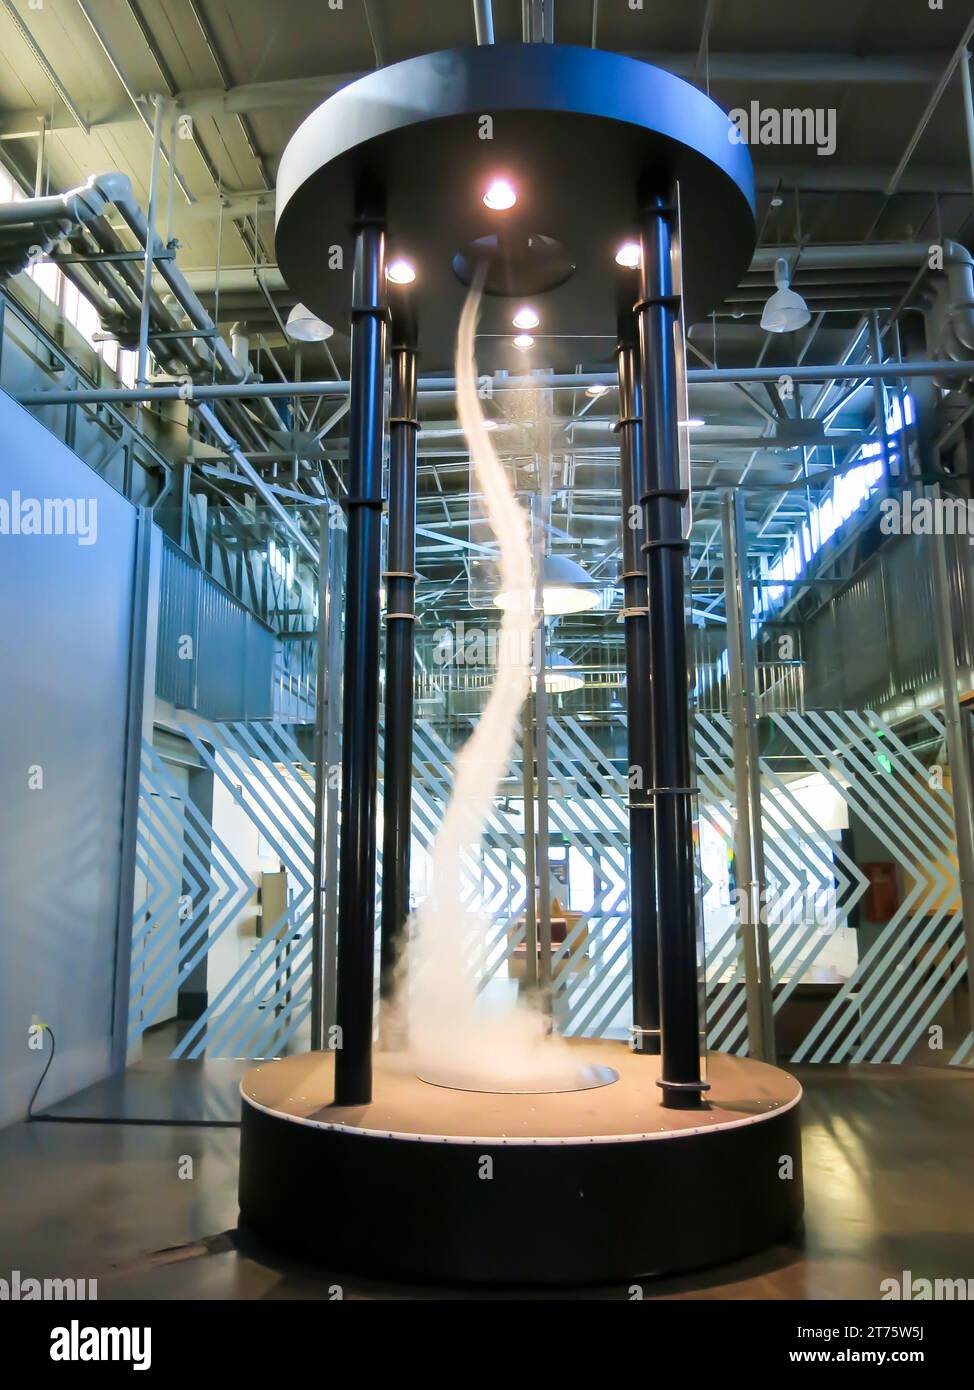 Tornado Exhibit at the Exploratorium, San Francisco, California Stock Photo